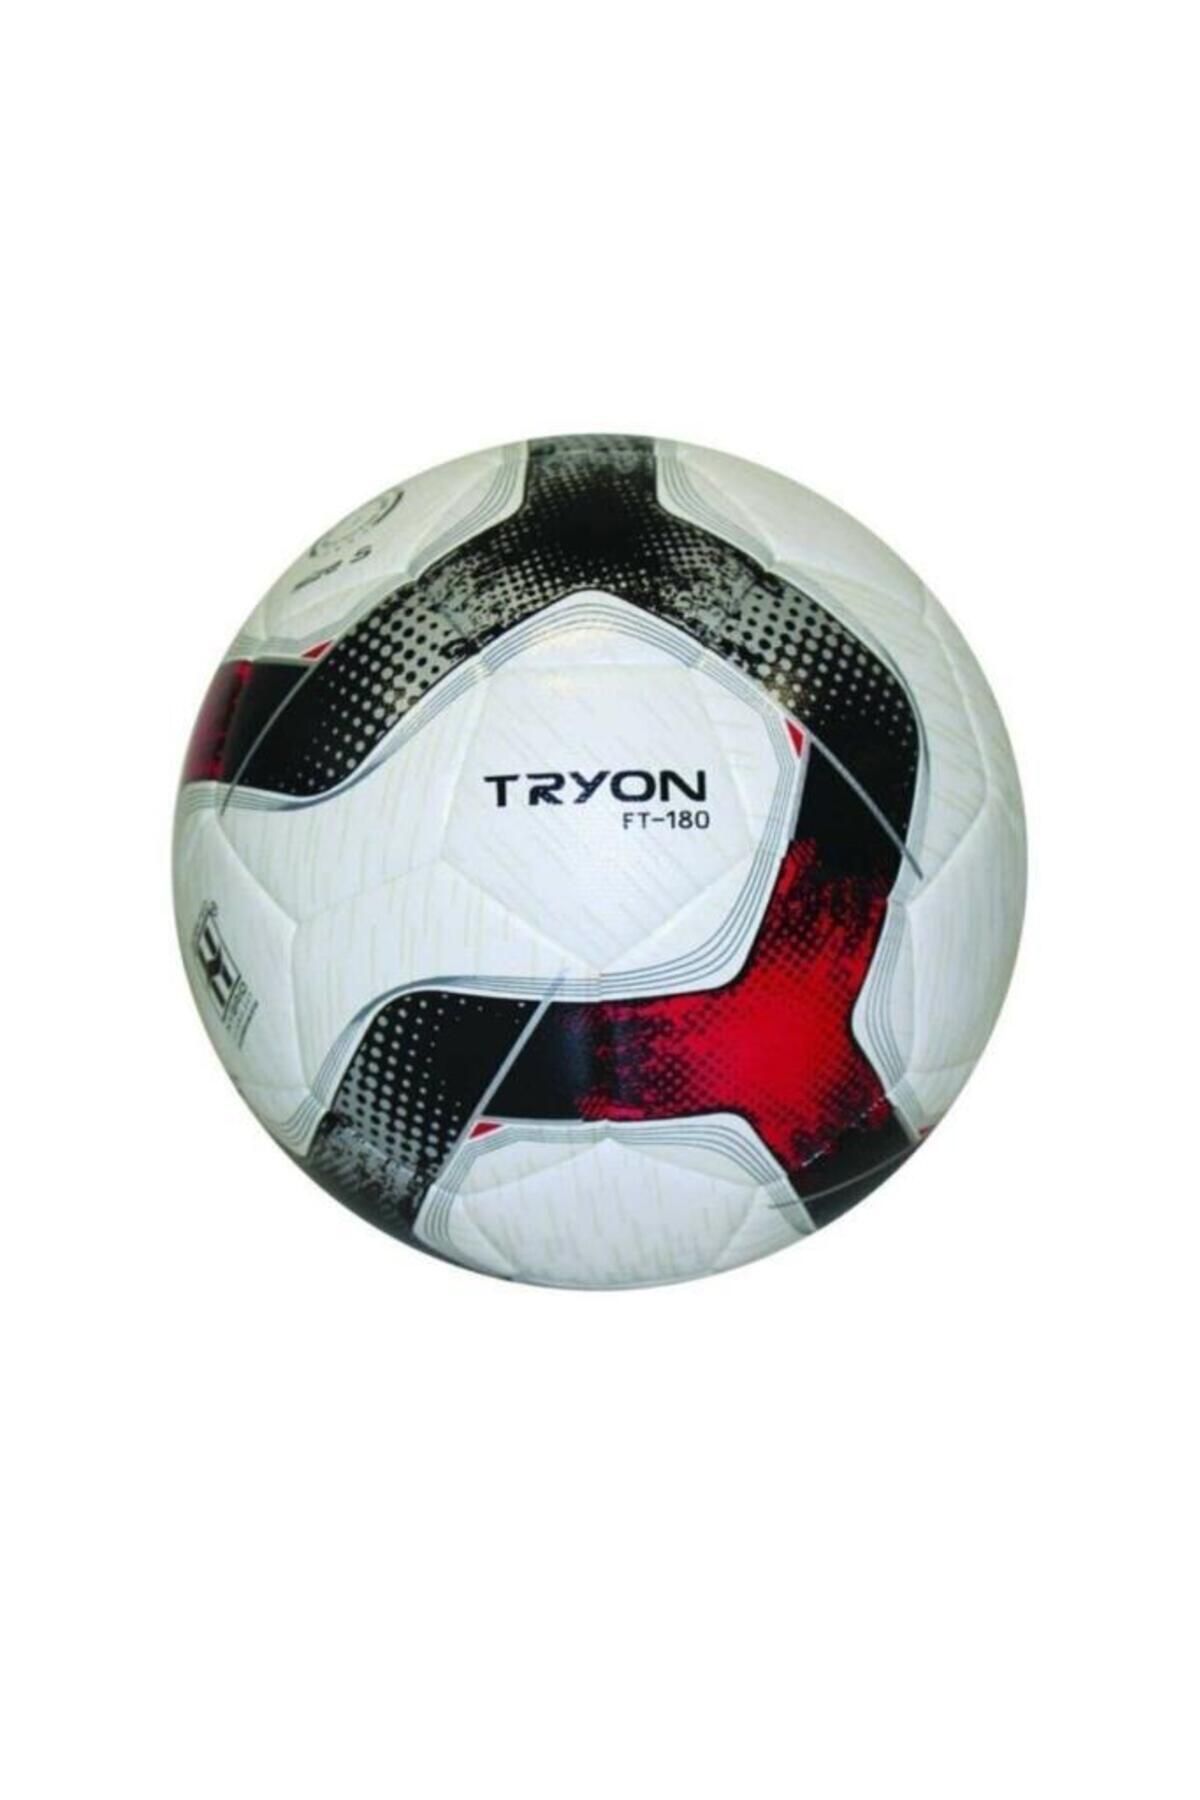 TRYON Ft-180 Hybrid Futbol Topu 4 Numara